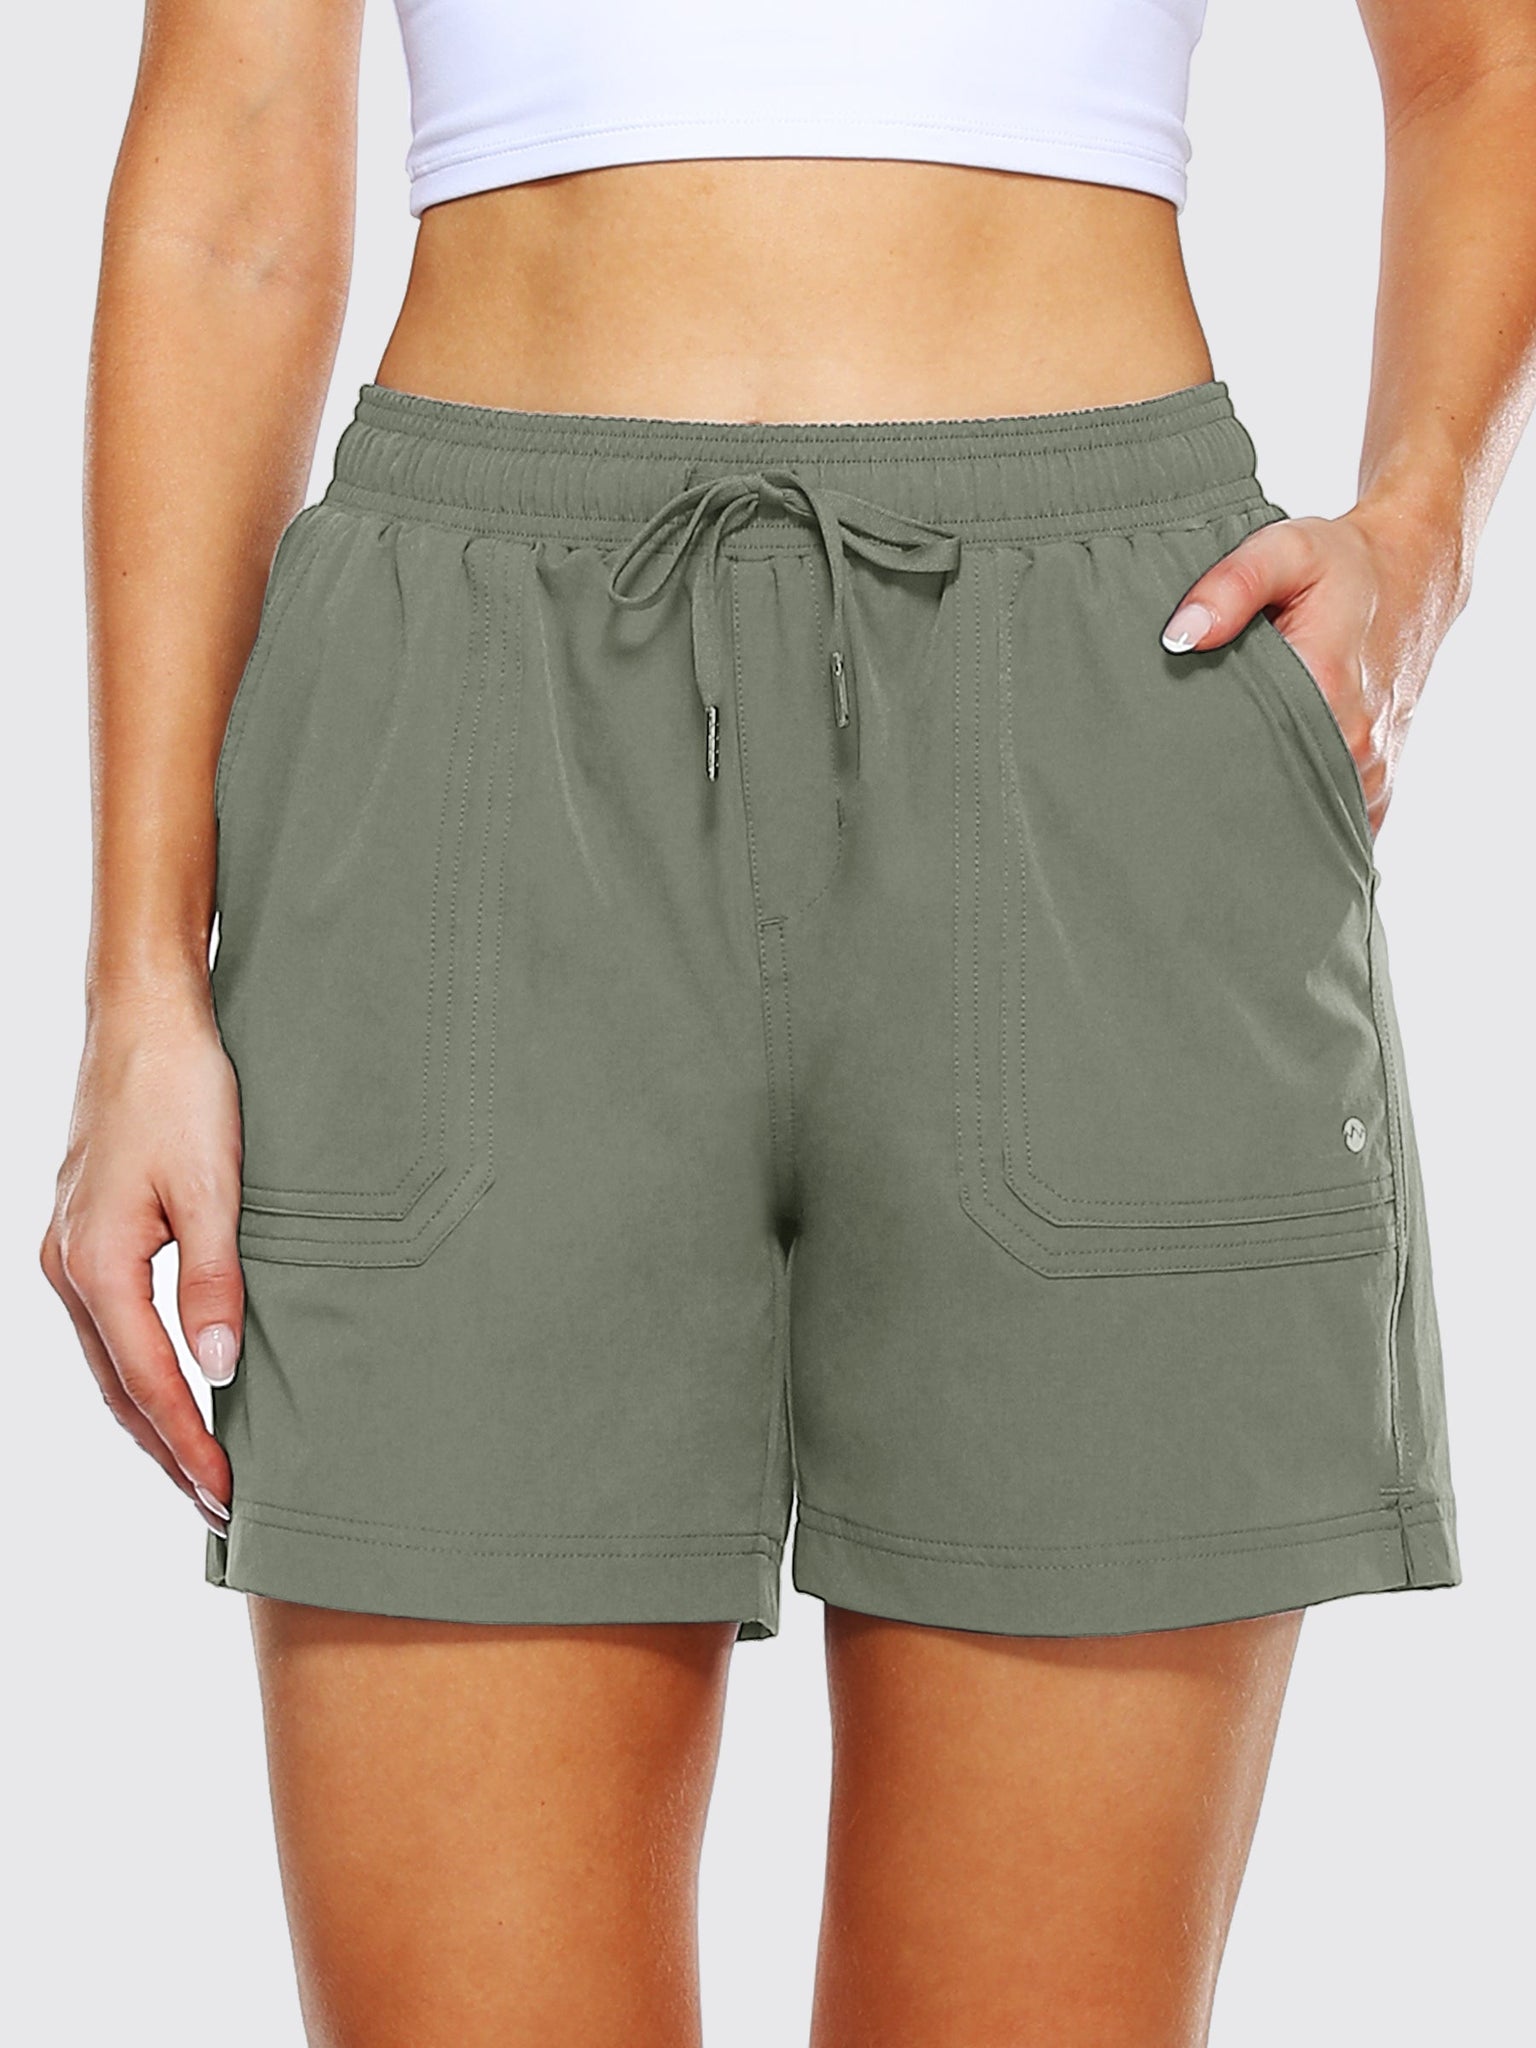 Women's Hiking Golf Shorts